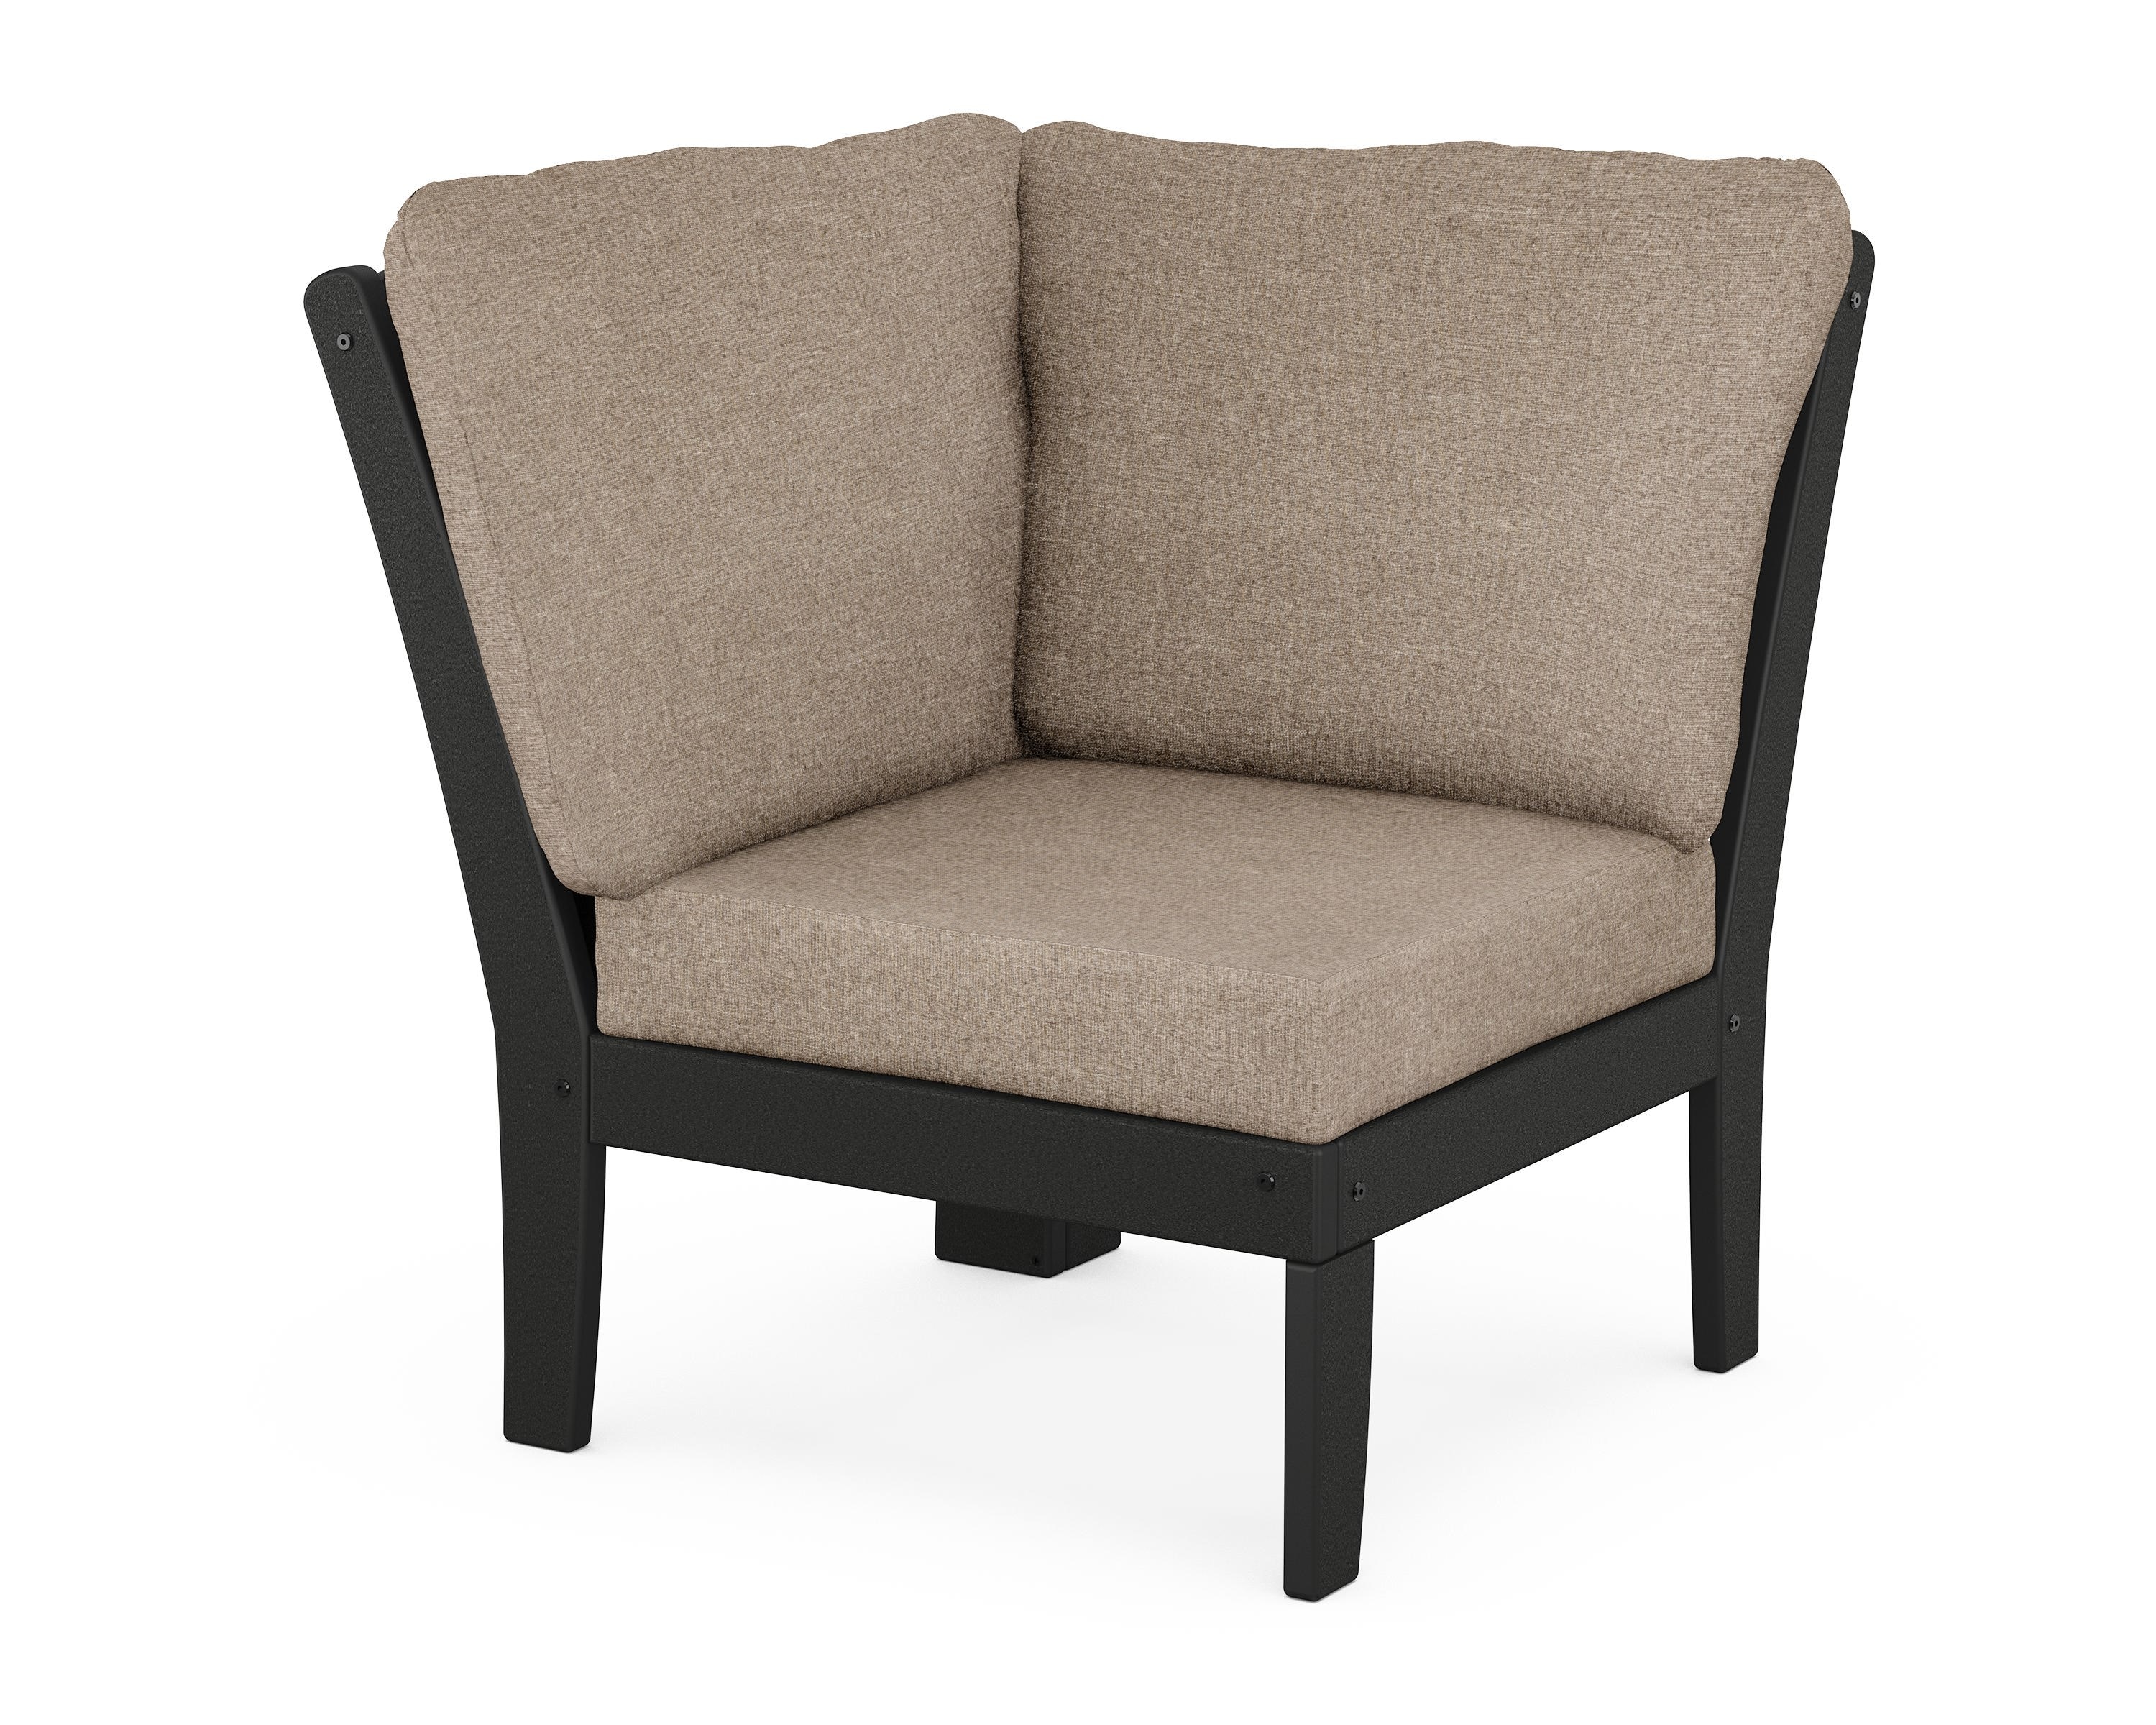 Trex Outdoor Furniture Yacht Club Modular Corner Chair